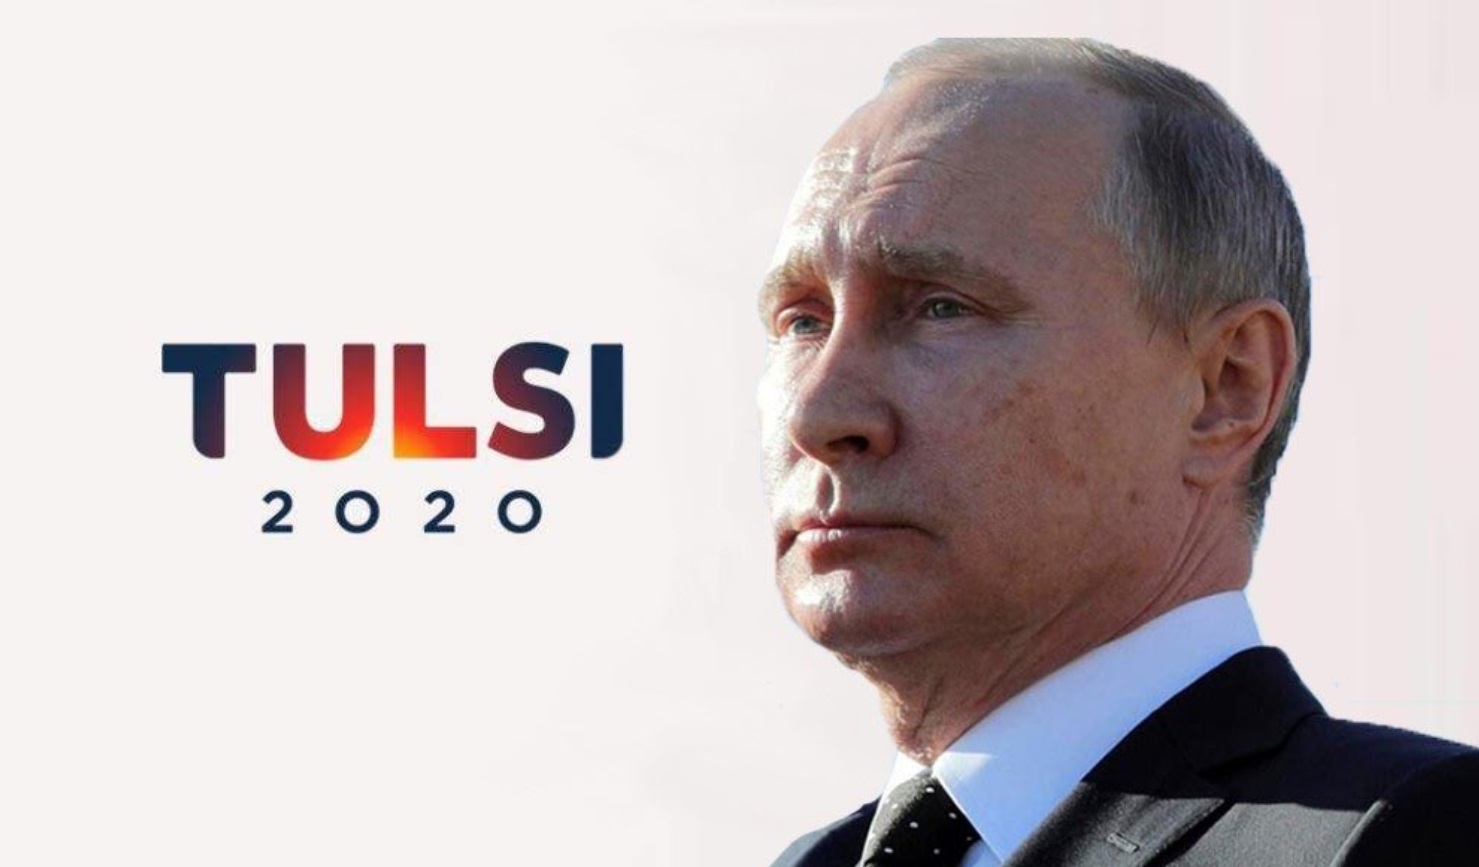 PHOTO Tulsi 2020 Gabbard Campaign Ad Featuring Vladimir Putin